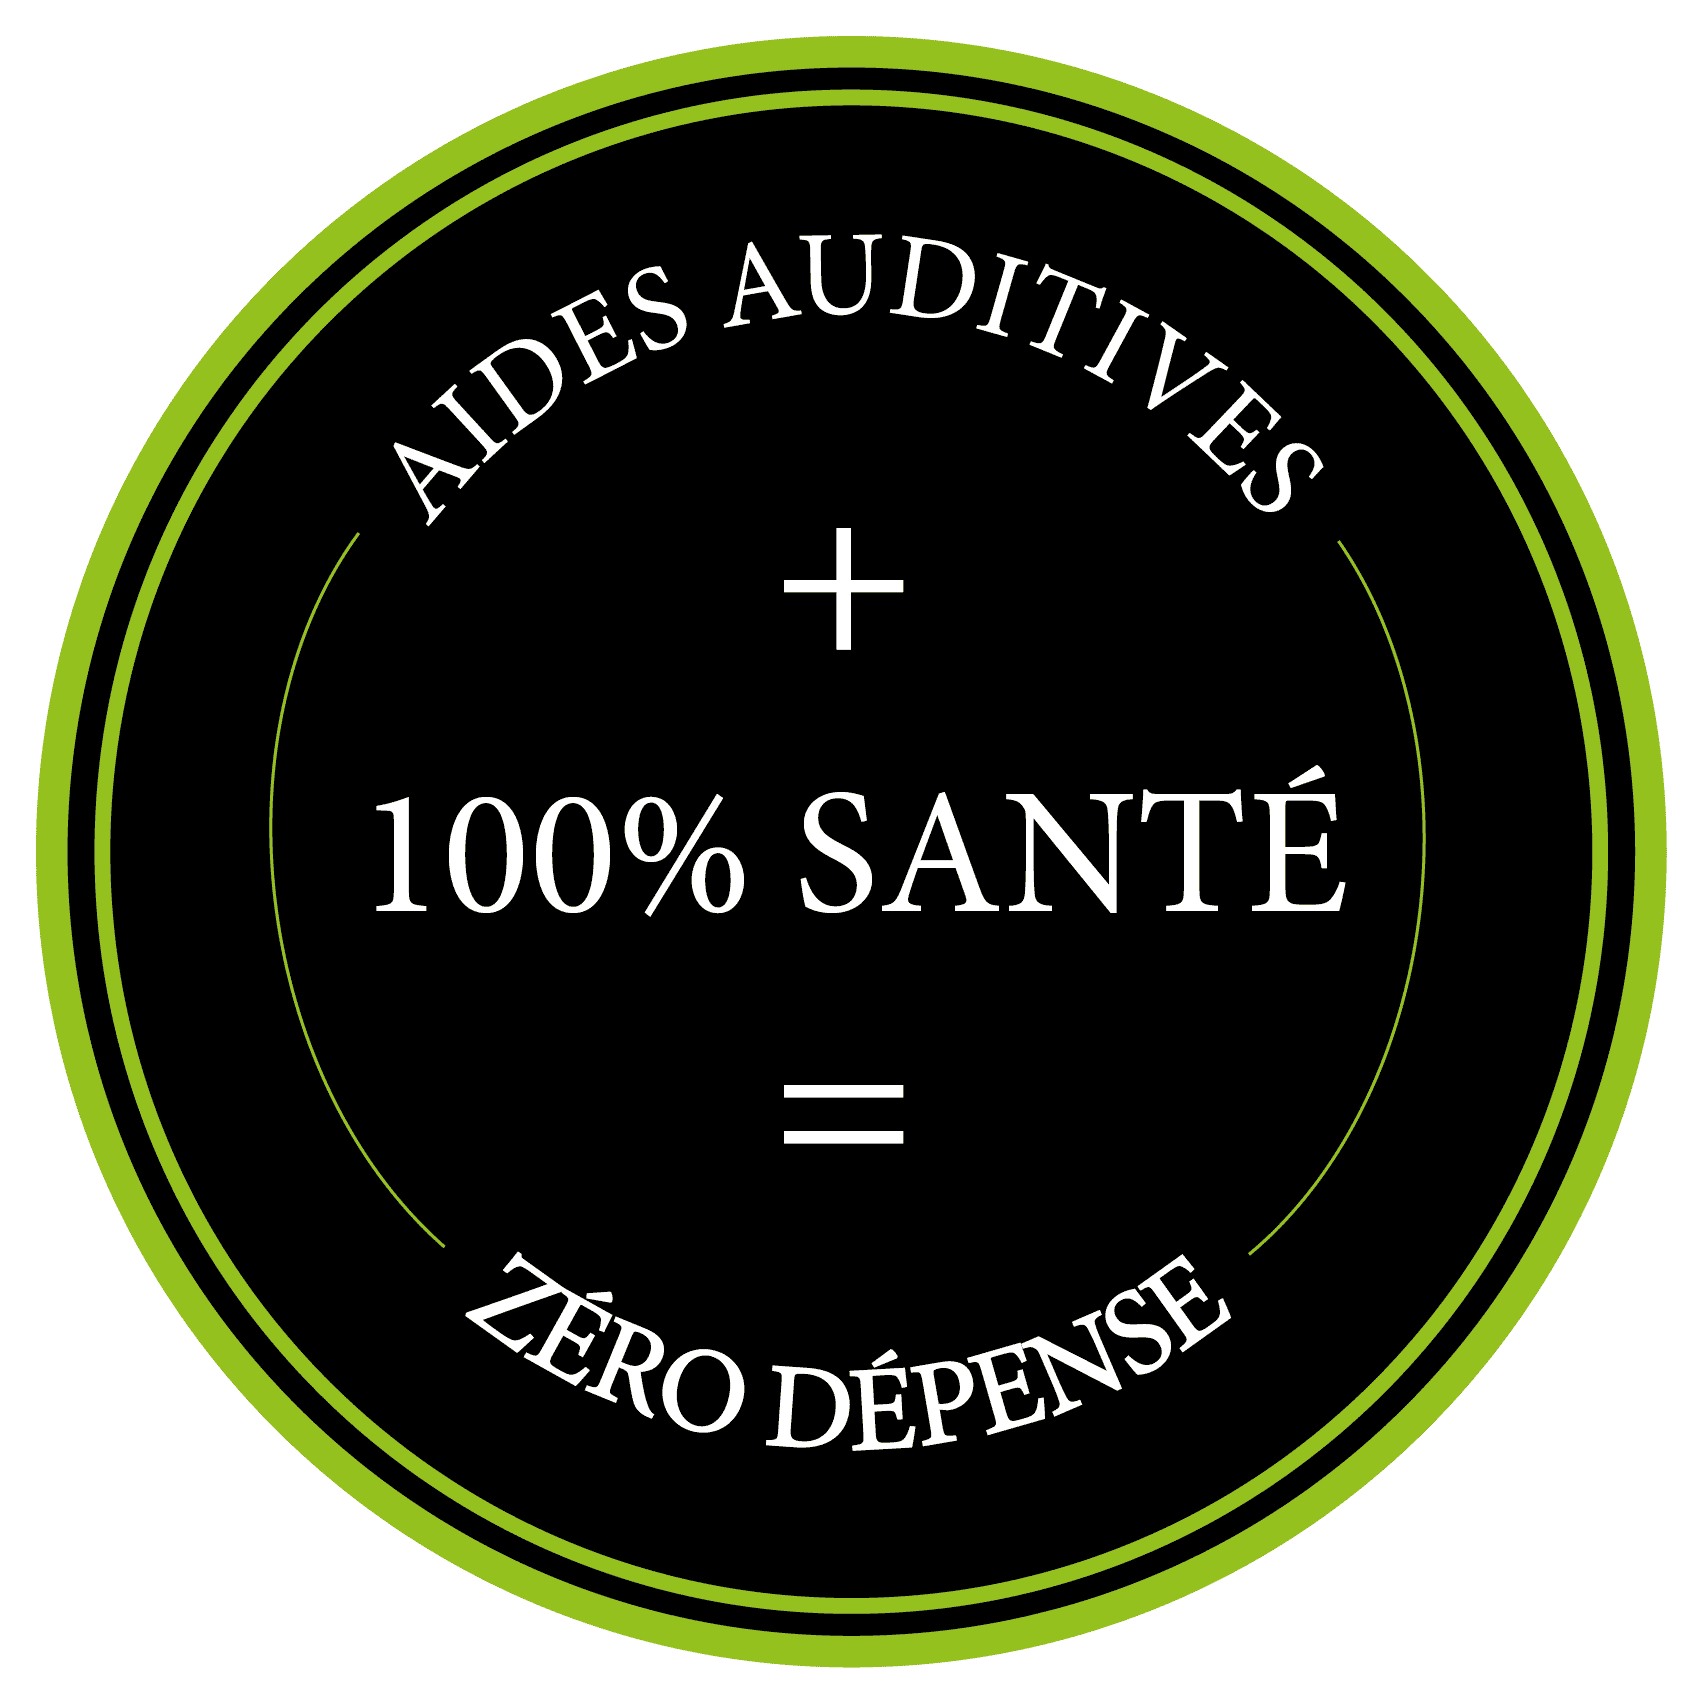 PATCH AUDIO 100 SANTE - Test auditif